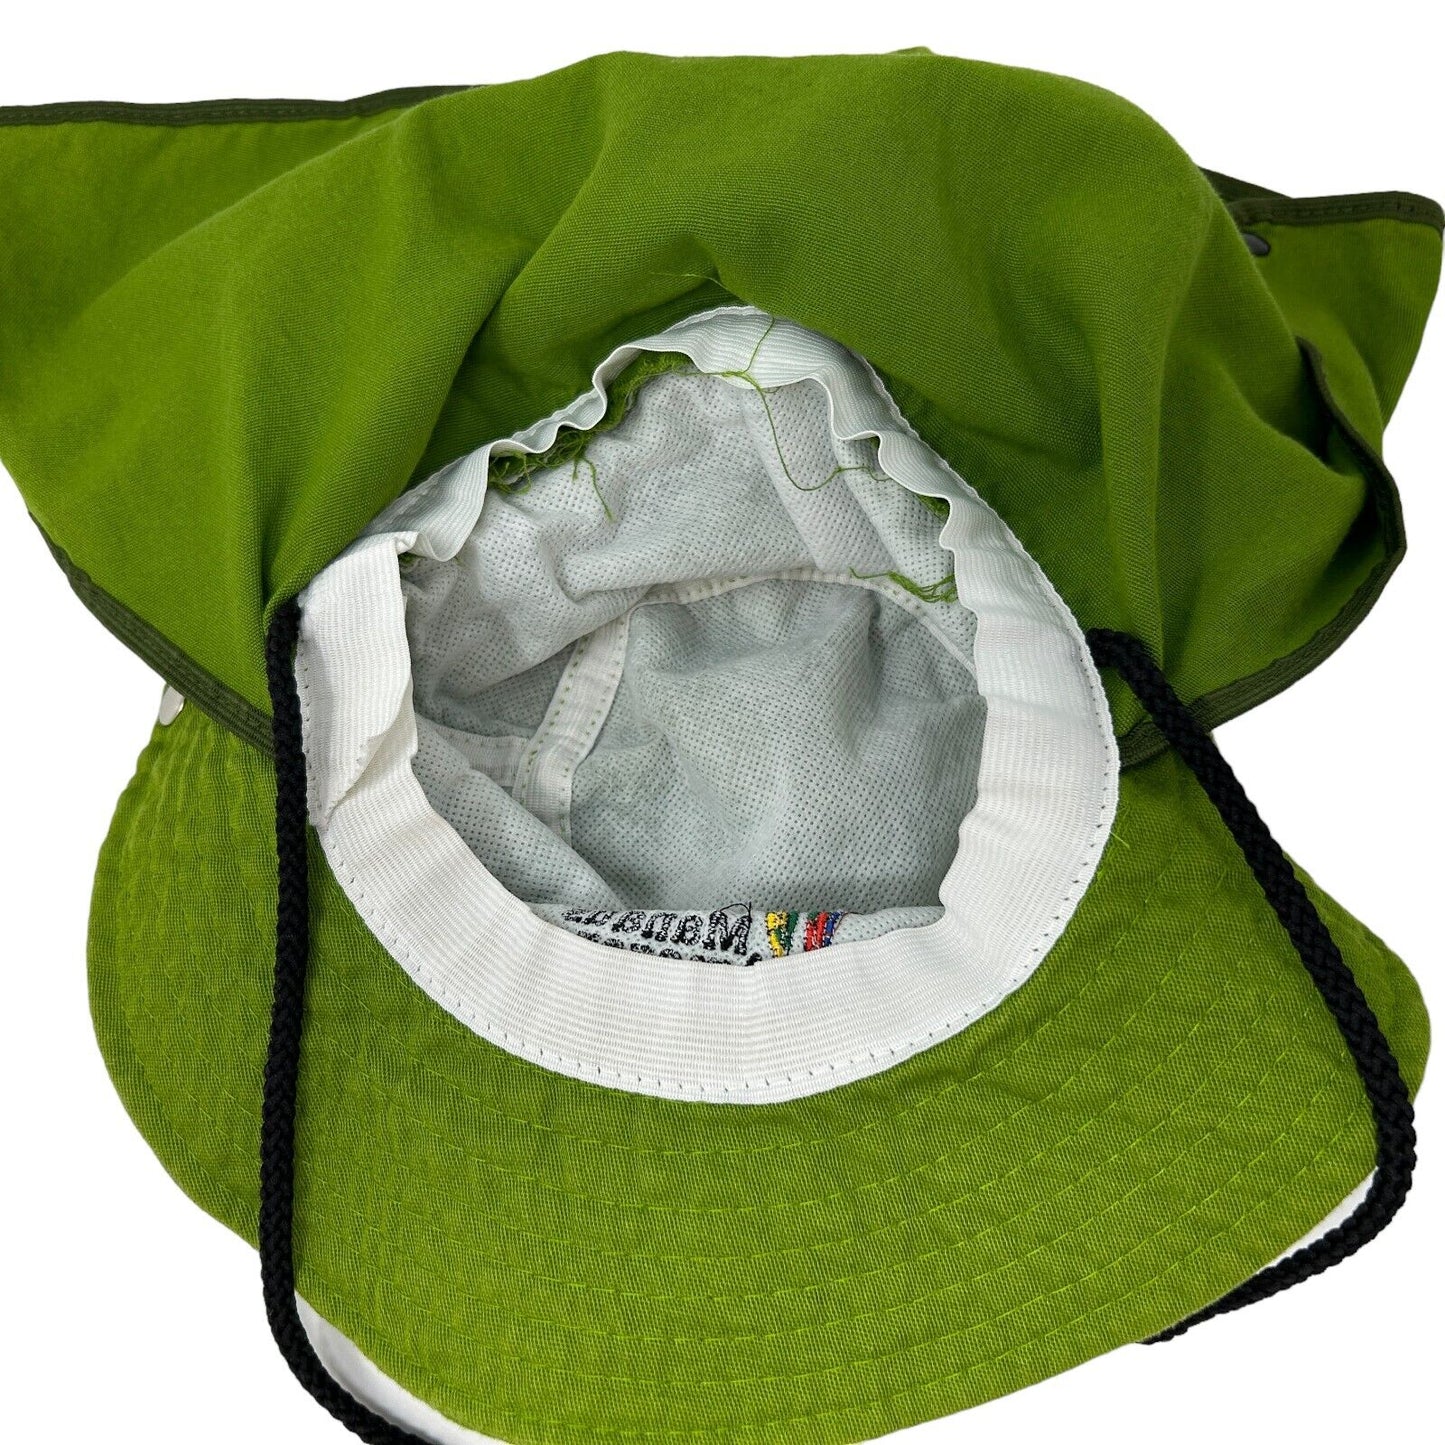 Manaus Amazonas Bush Boonie Hat With Neck Cover Flap Green Amazon Brazil